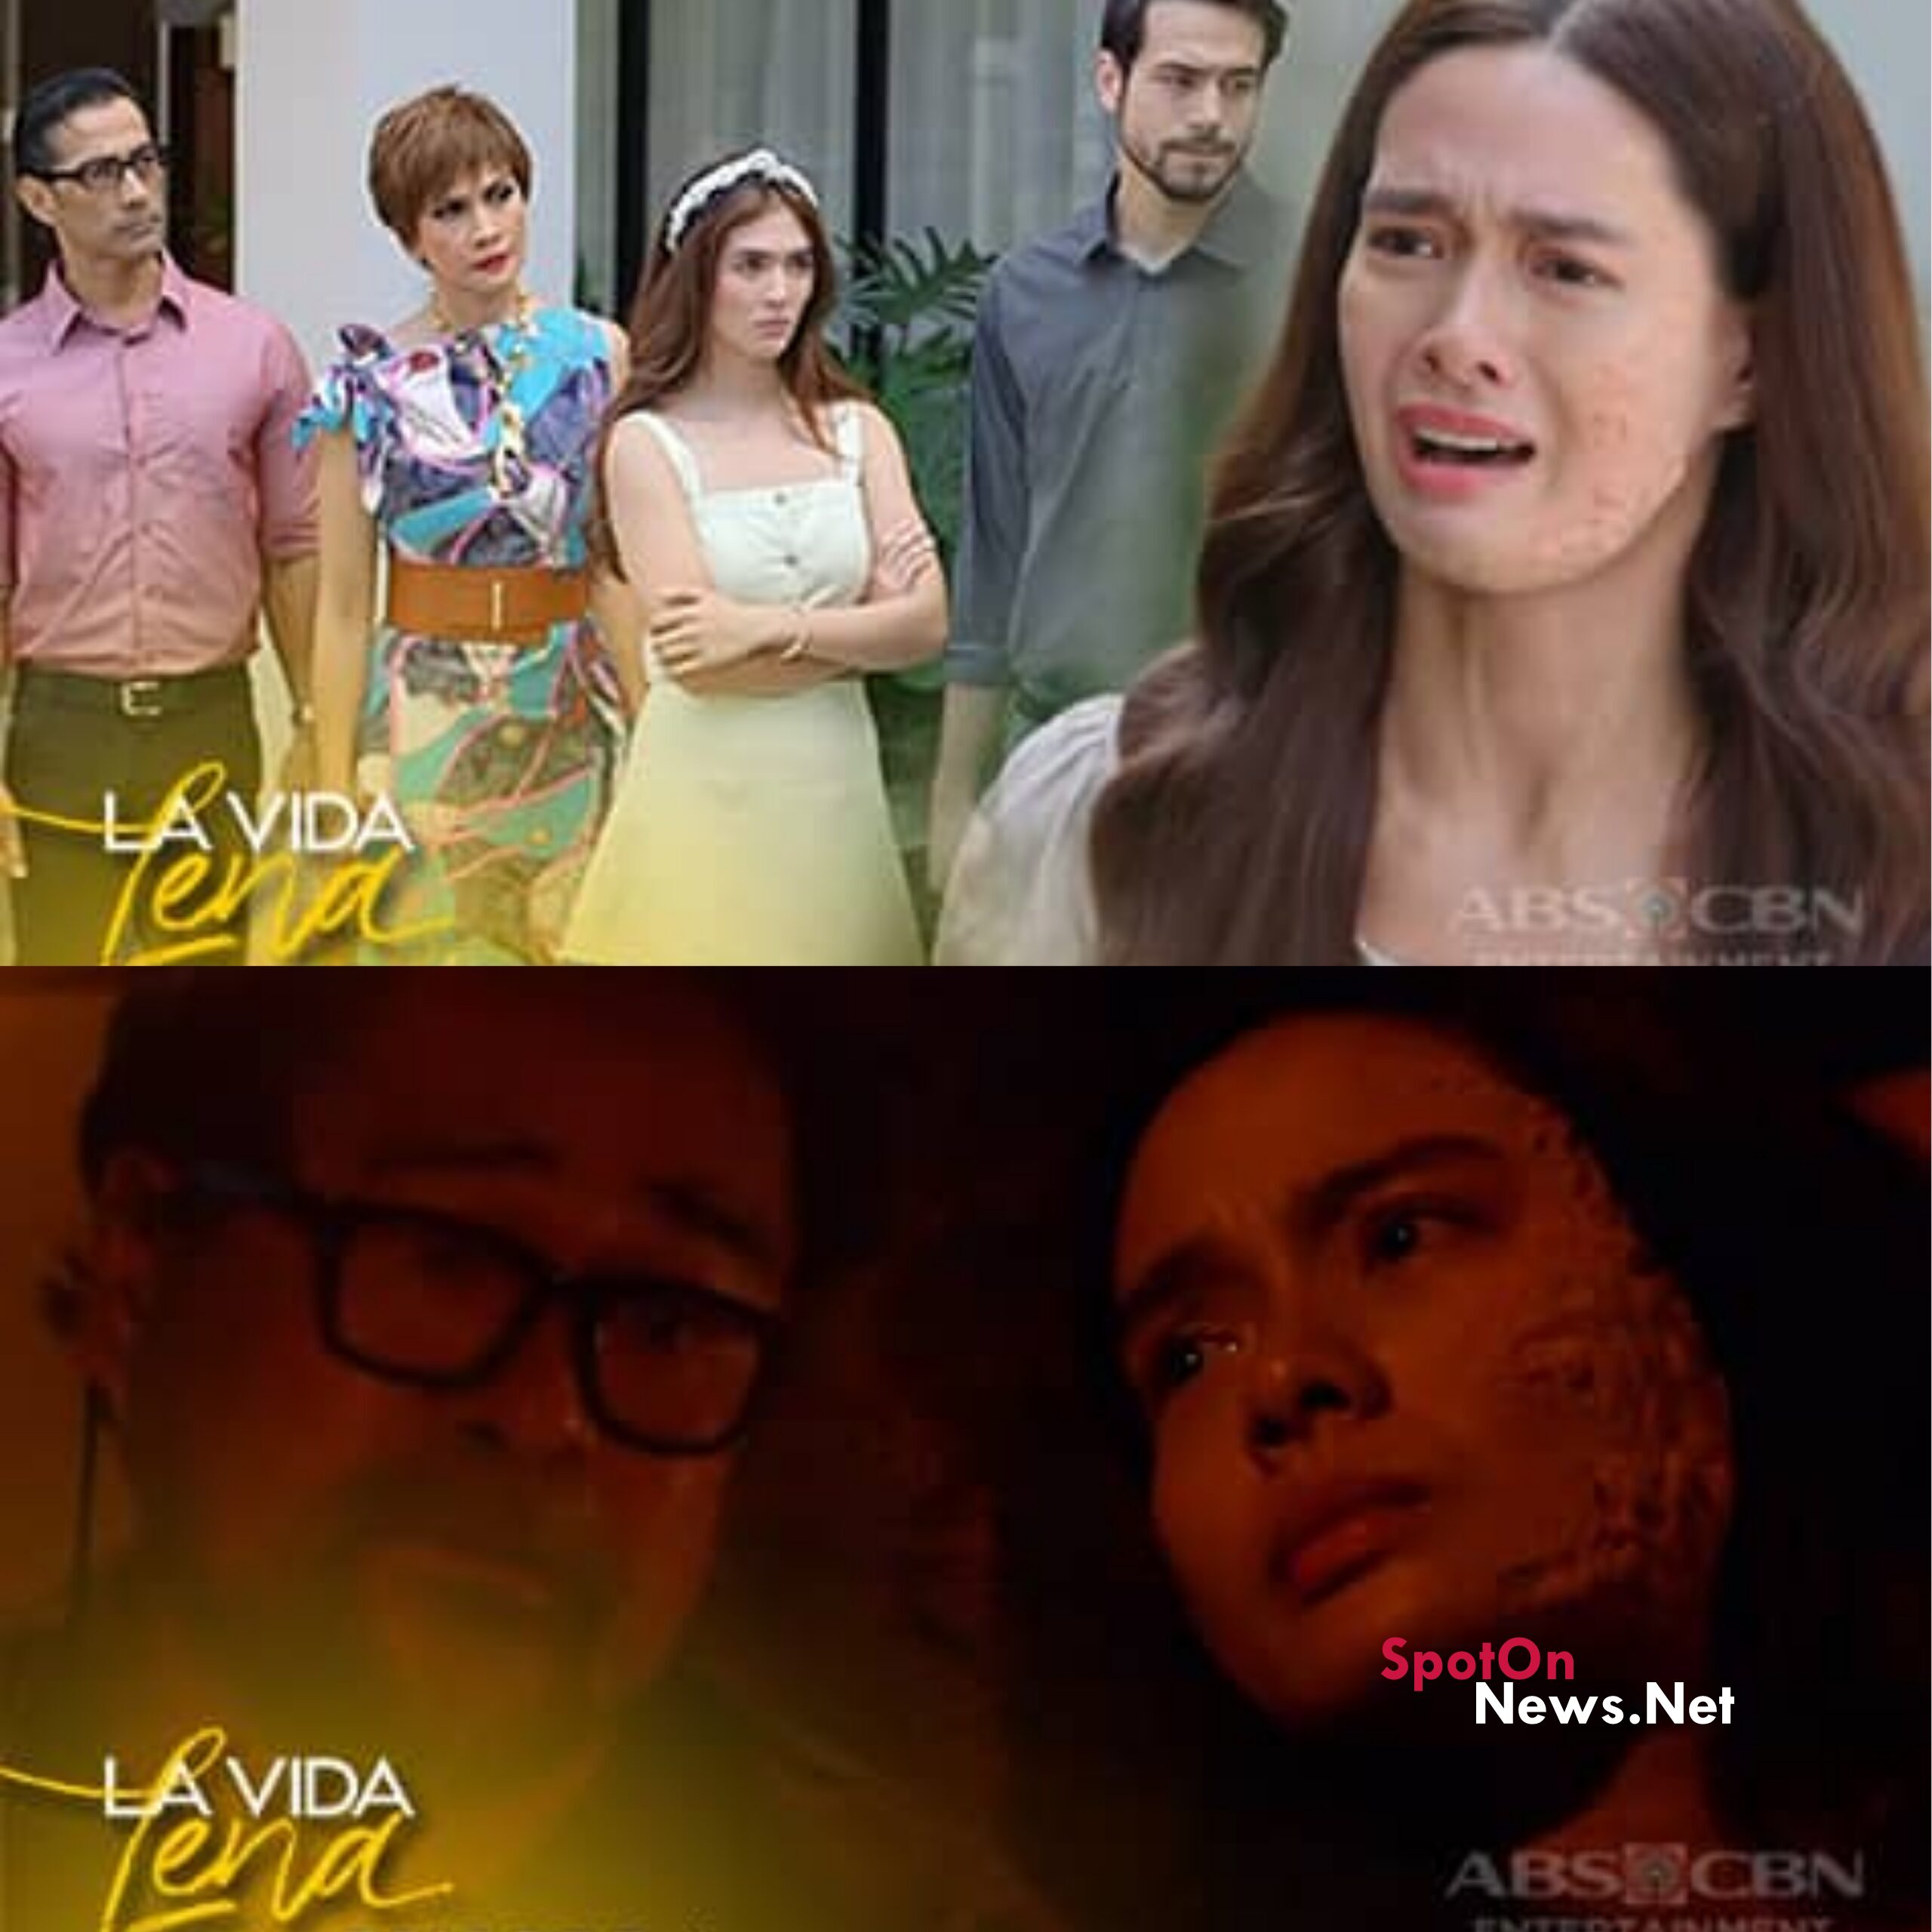 La Vida Lena Episode 5